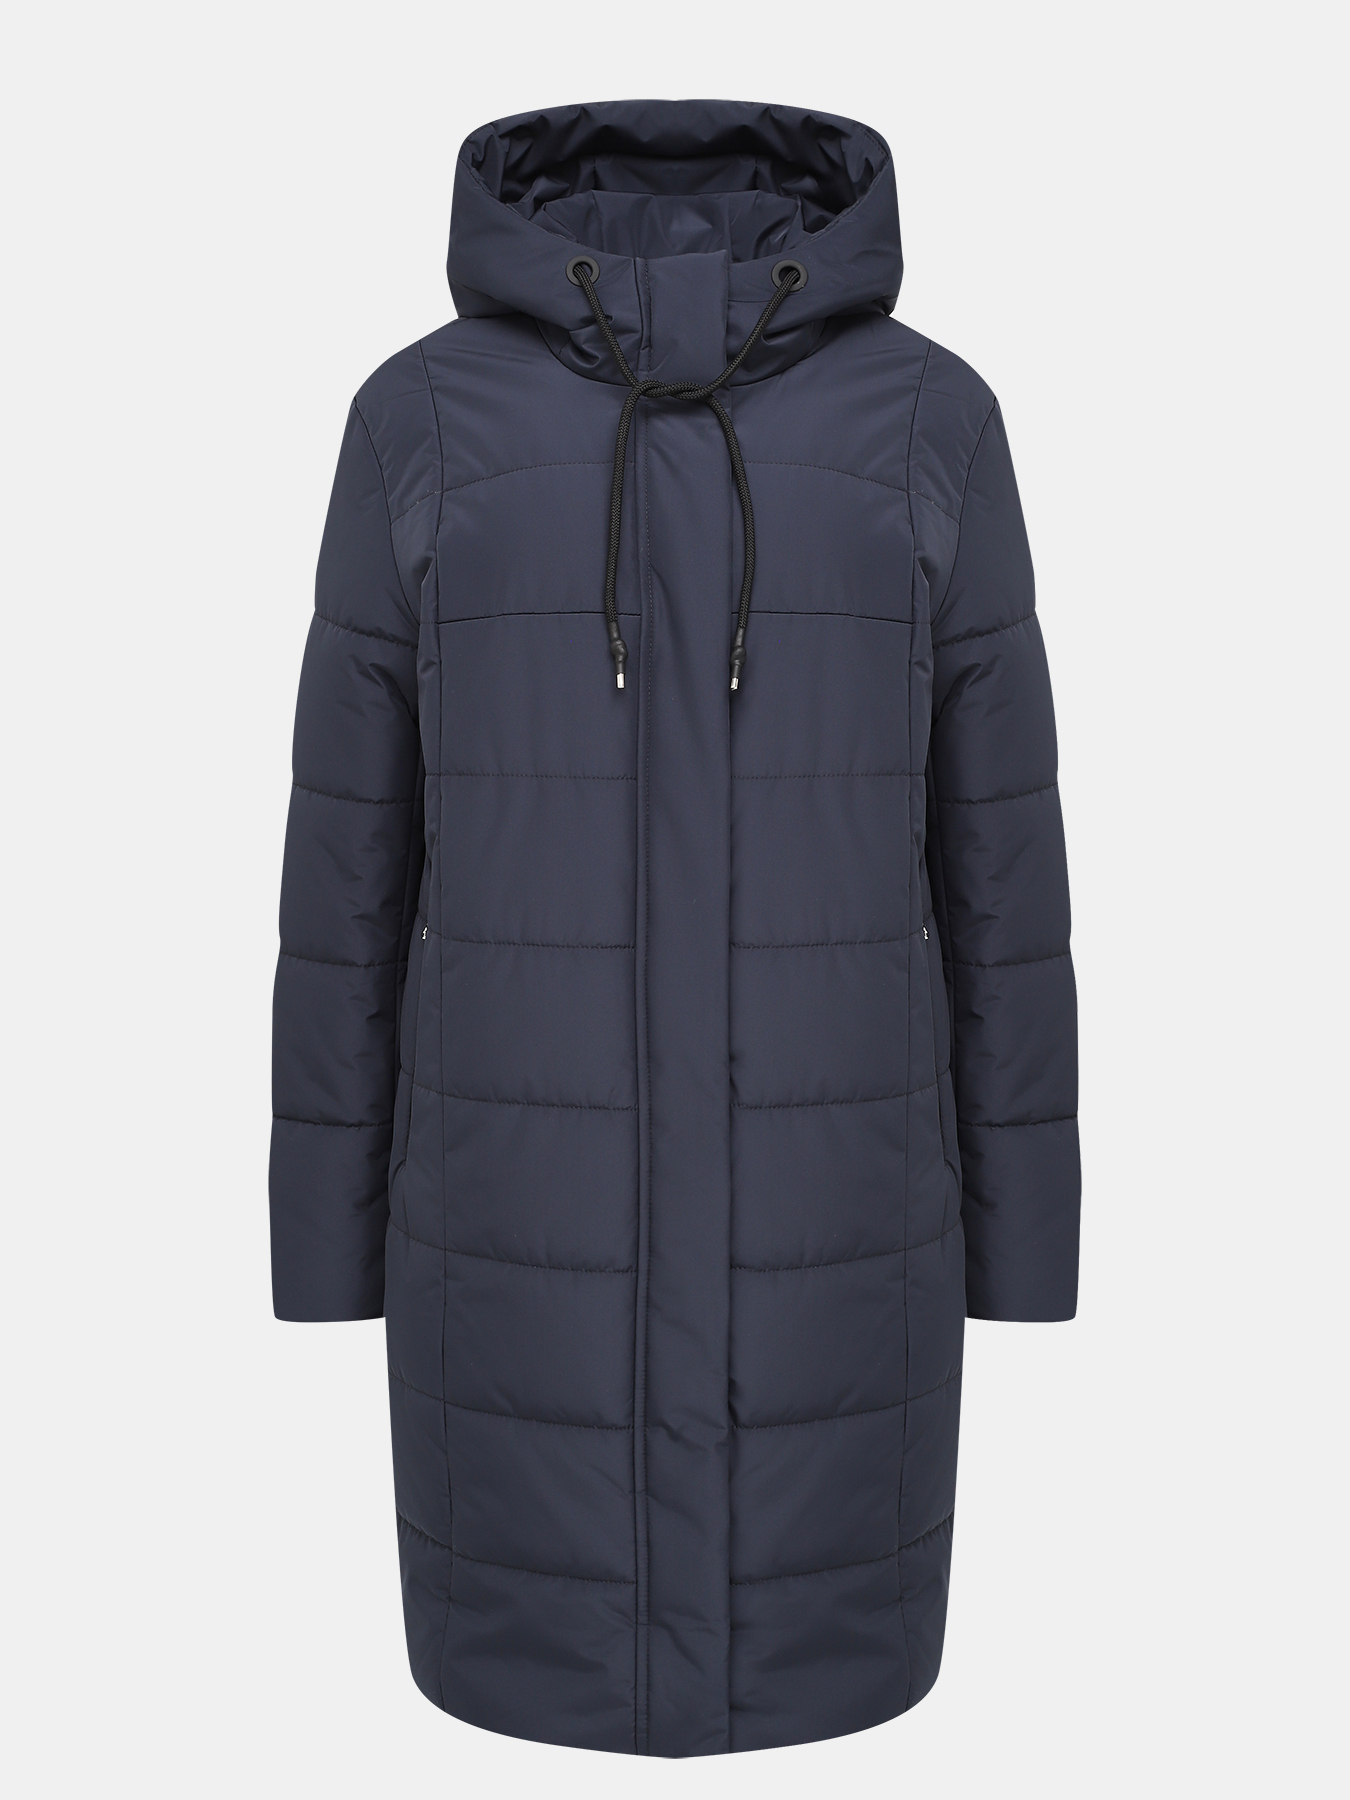 Пальто зимнее Maritta 433548-022, цвет темно-синий, размер 48 - фото 1